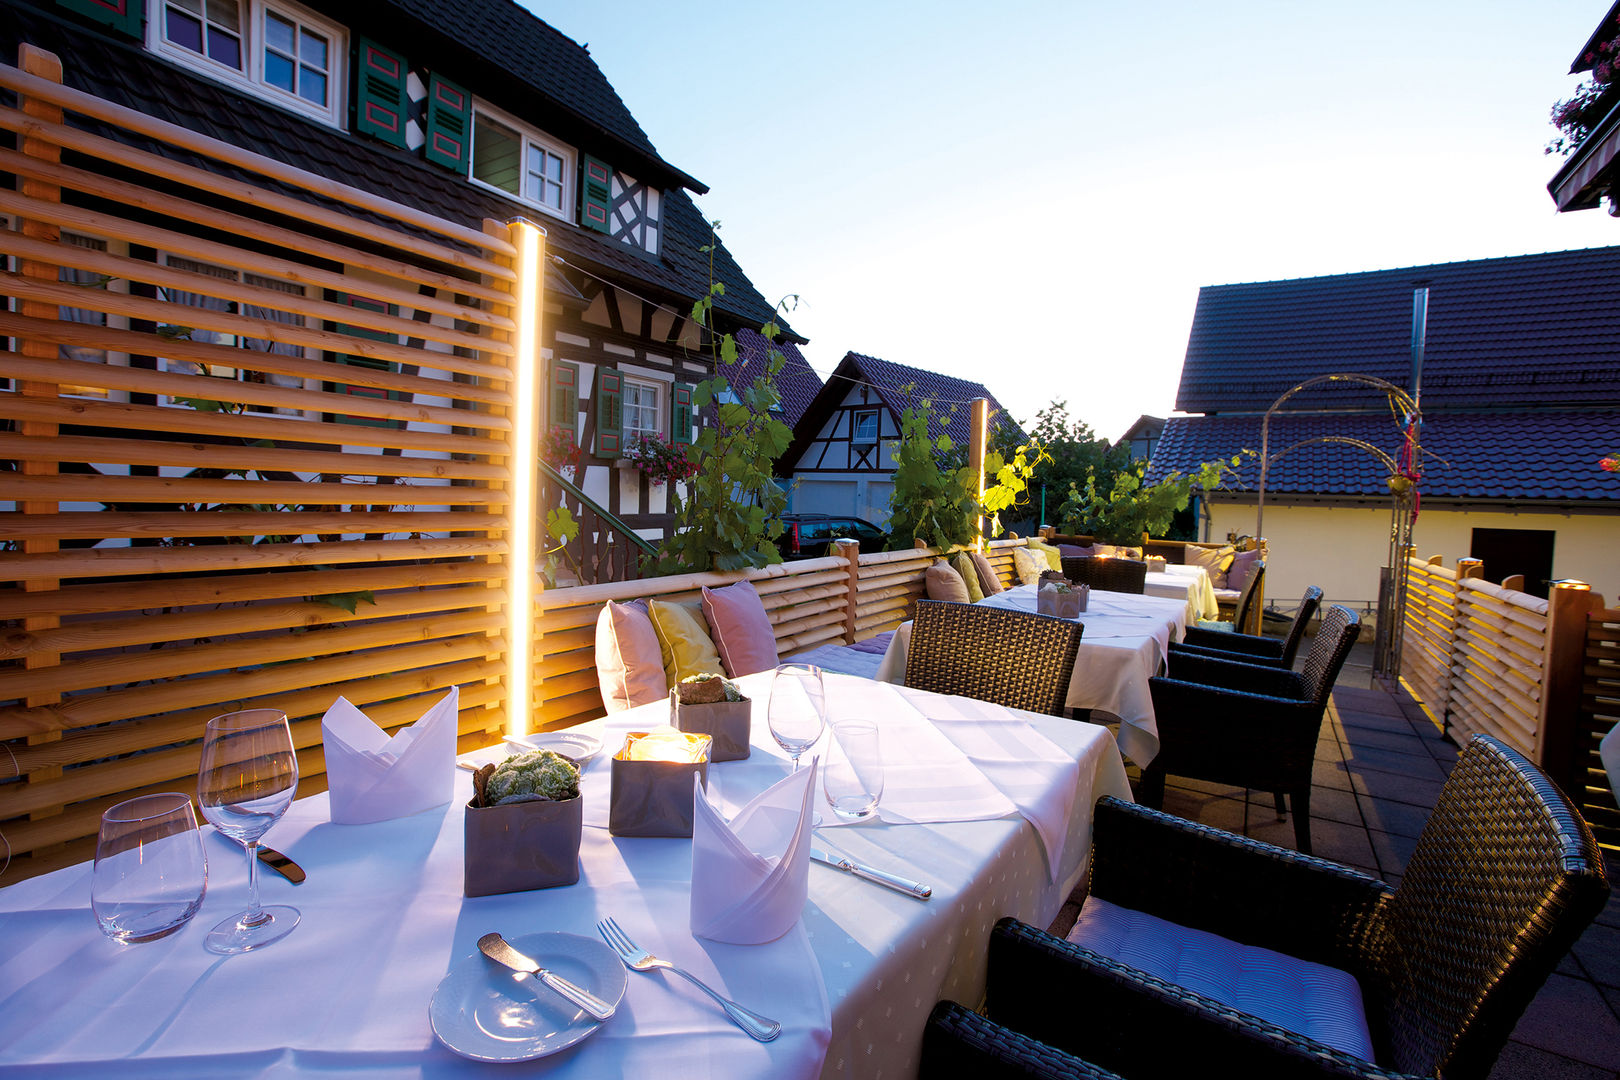 Dinner mit RomanticLite, Braun & Würfele - Holz im Garten Braun & Würfele - Holz im Garten Terrace لکڑی Wood effect